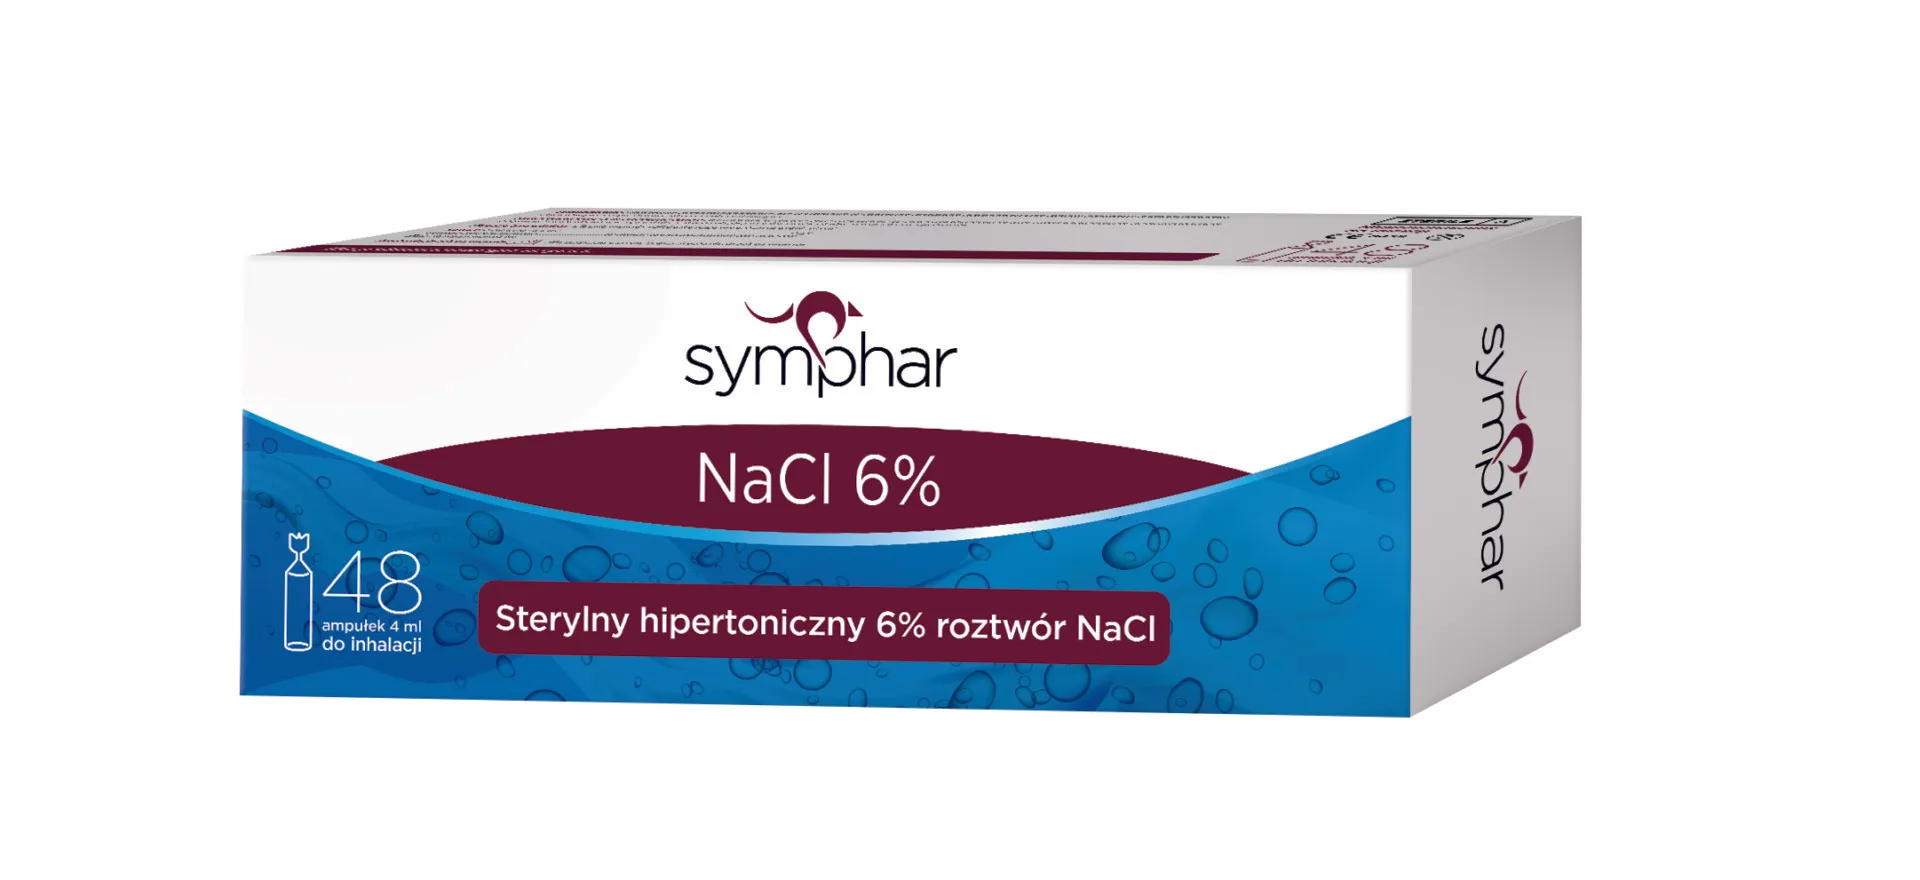 Symphar NaCl 6%, roztwor hipertoniczny,  48 ampułek po 4 ml